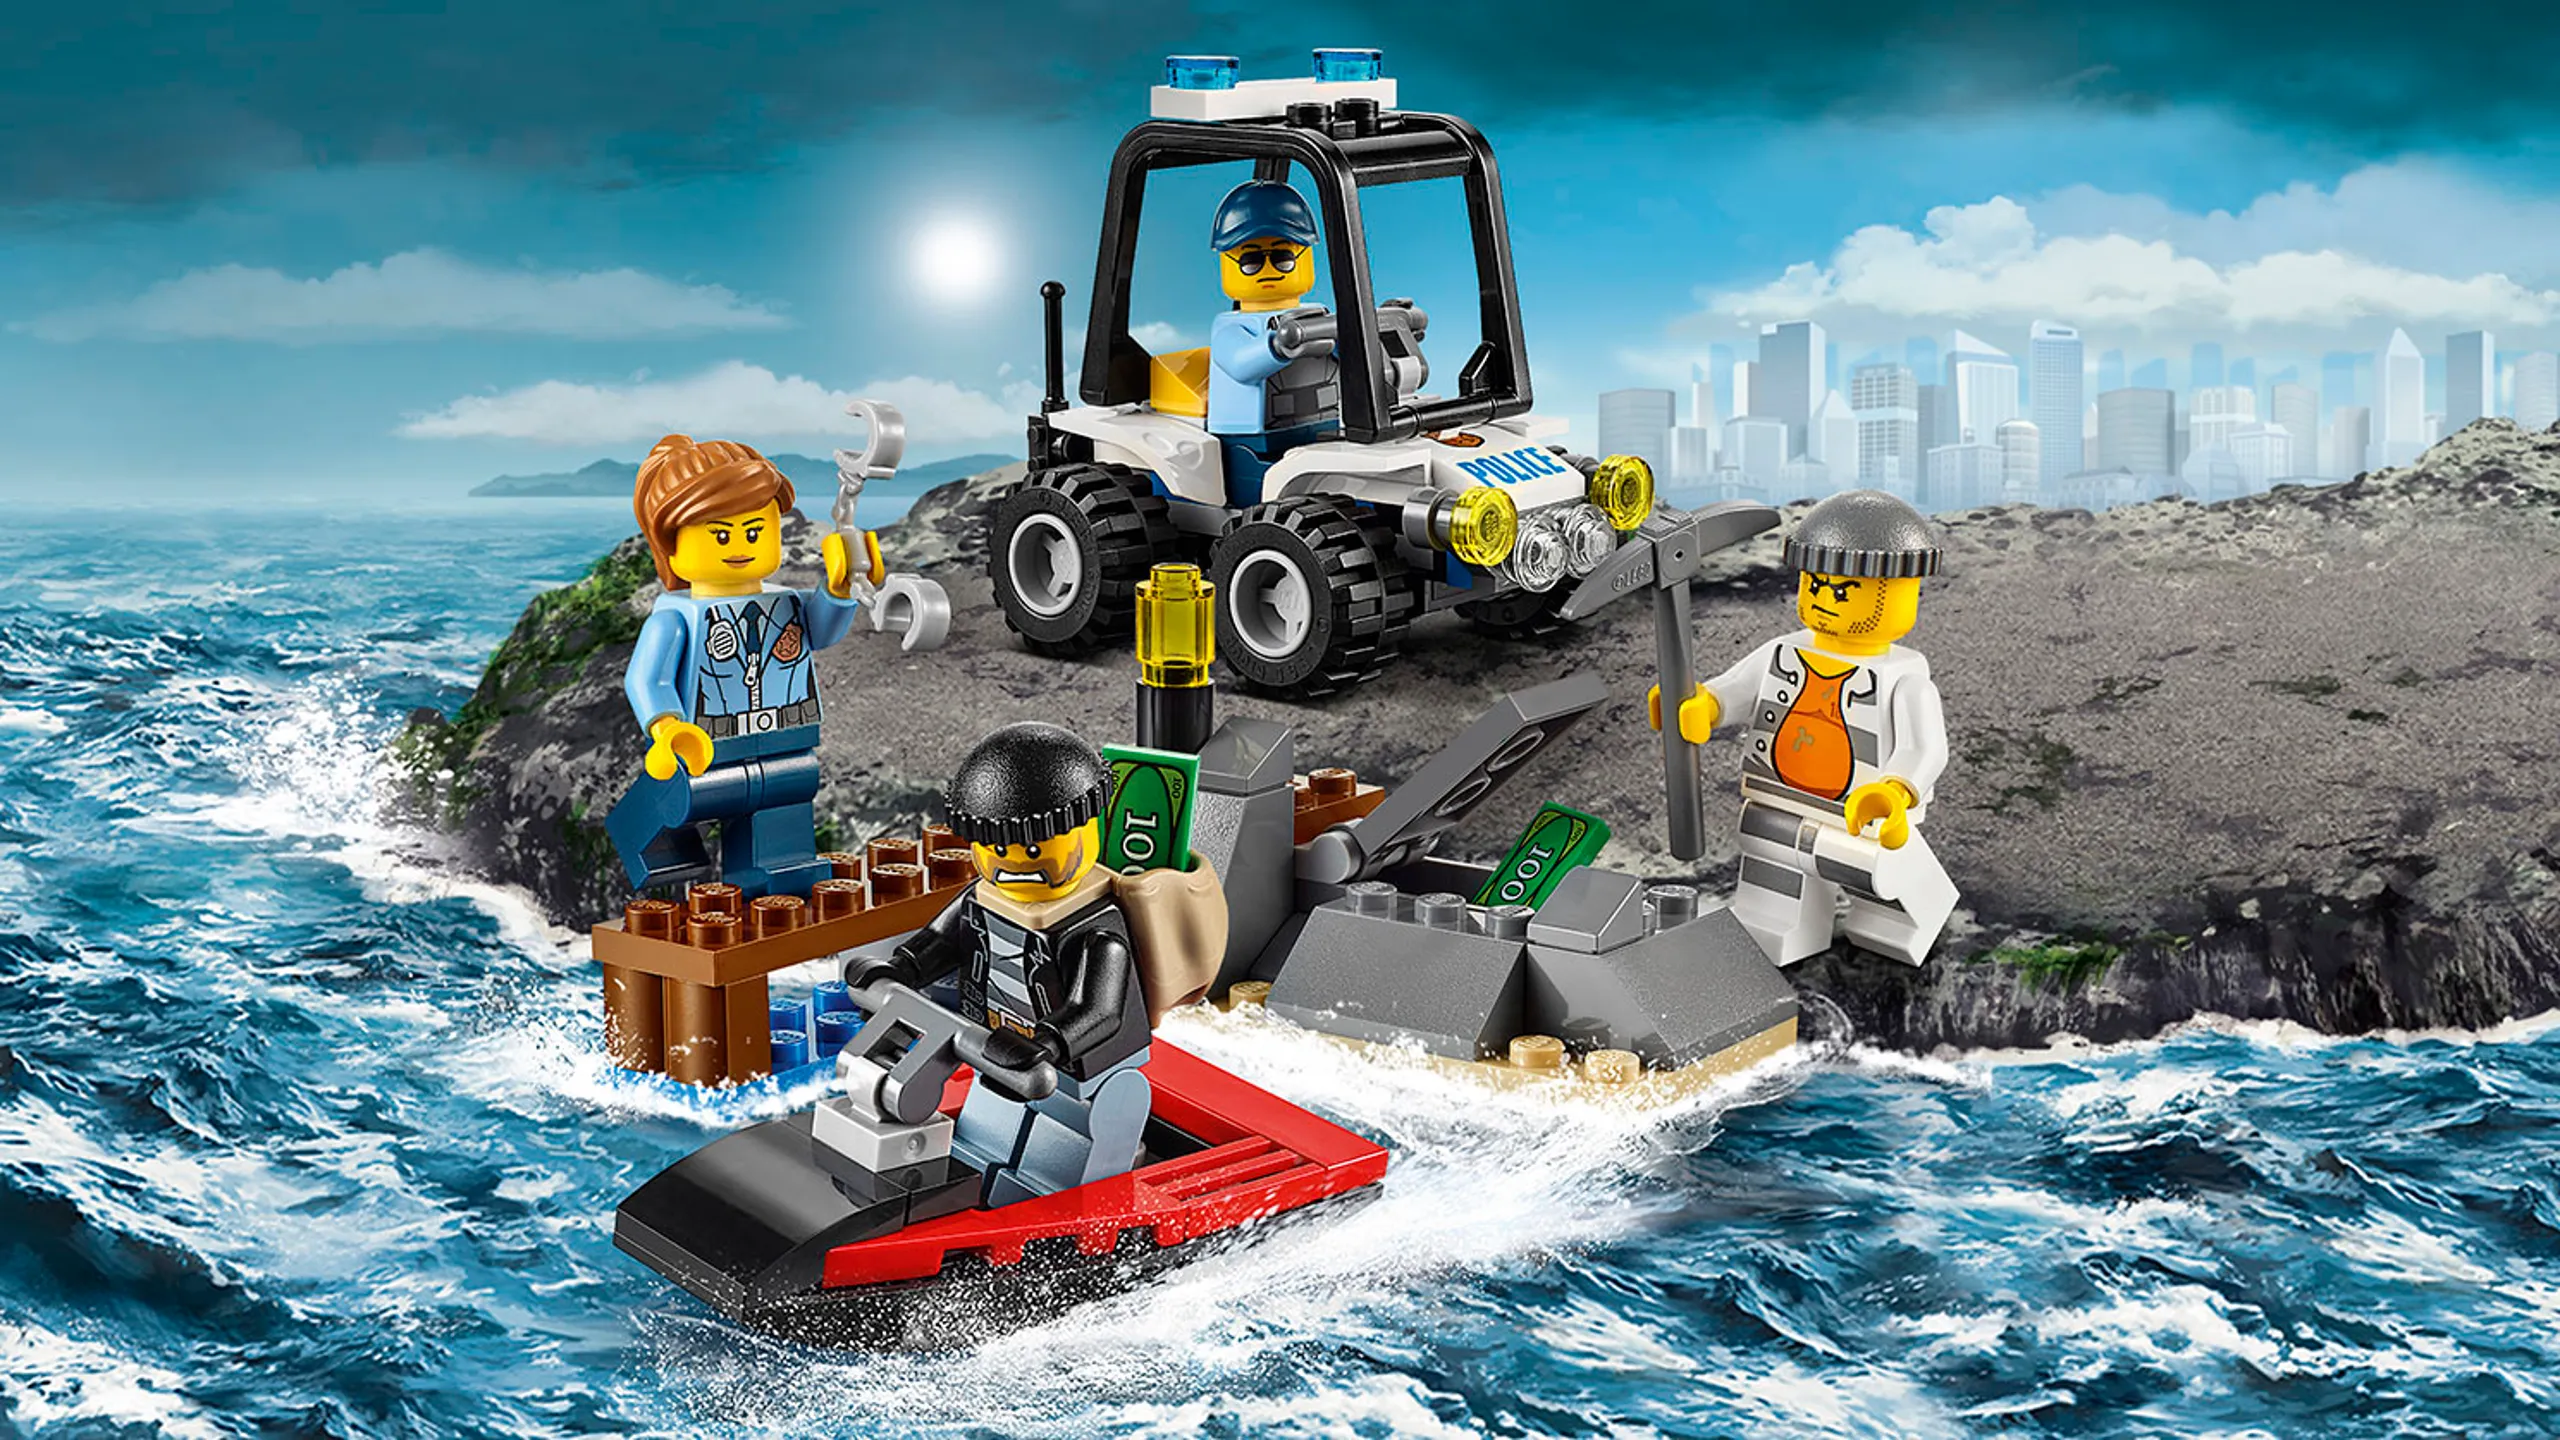 LEGO City Prison Island action – Prison Island Starter Set 60127